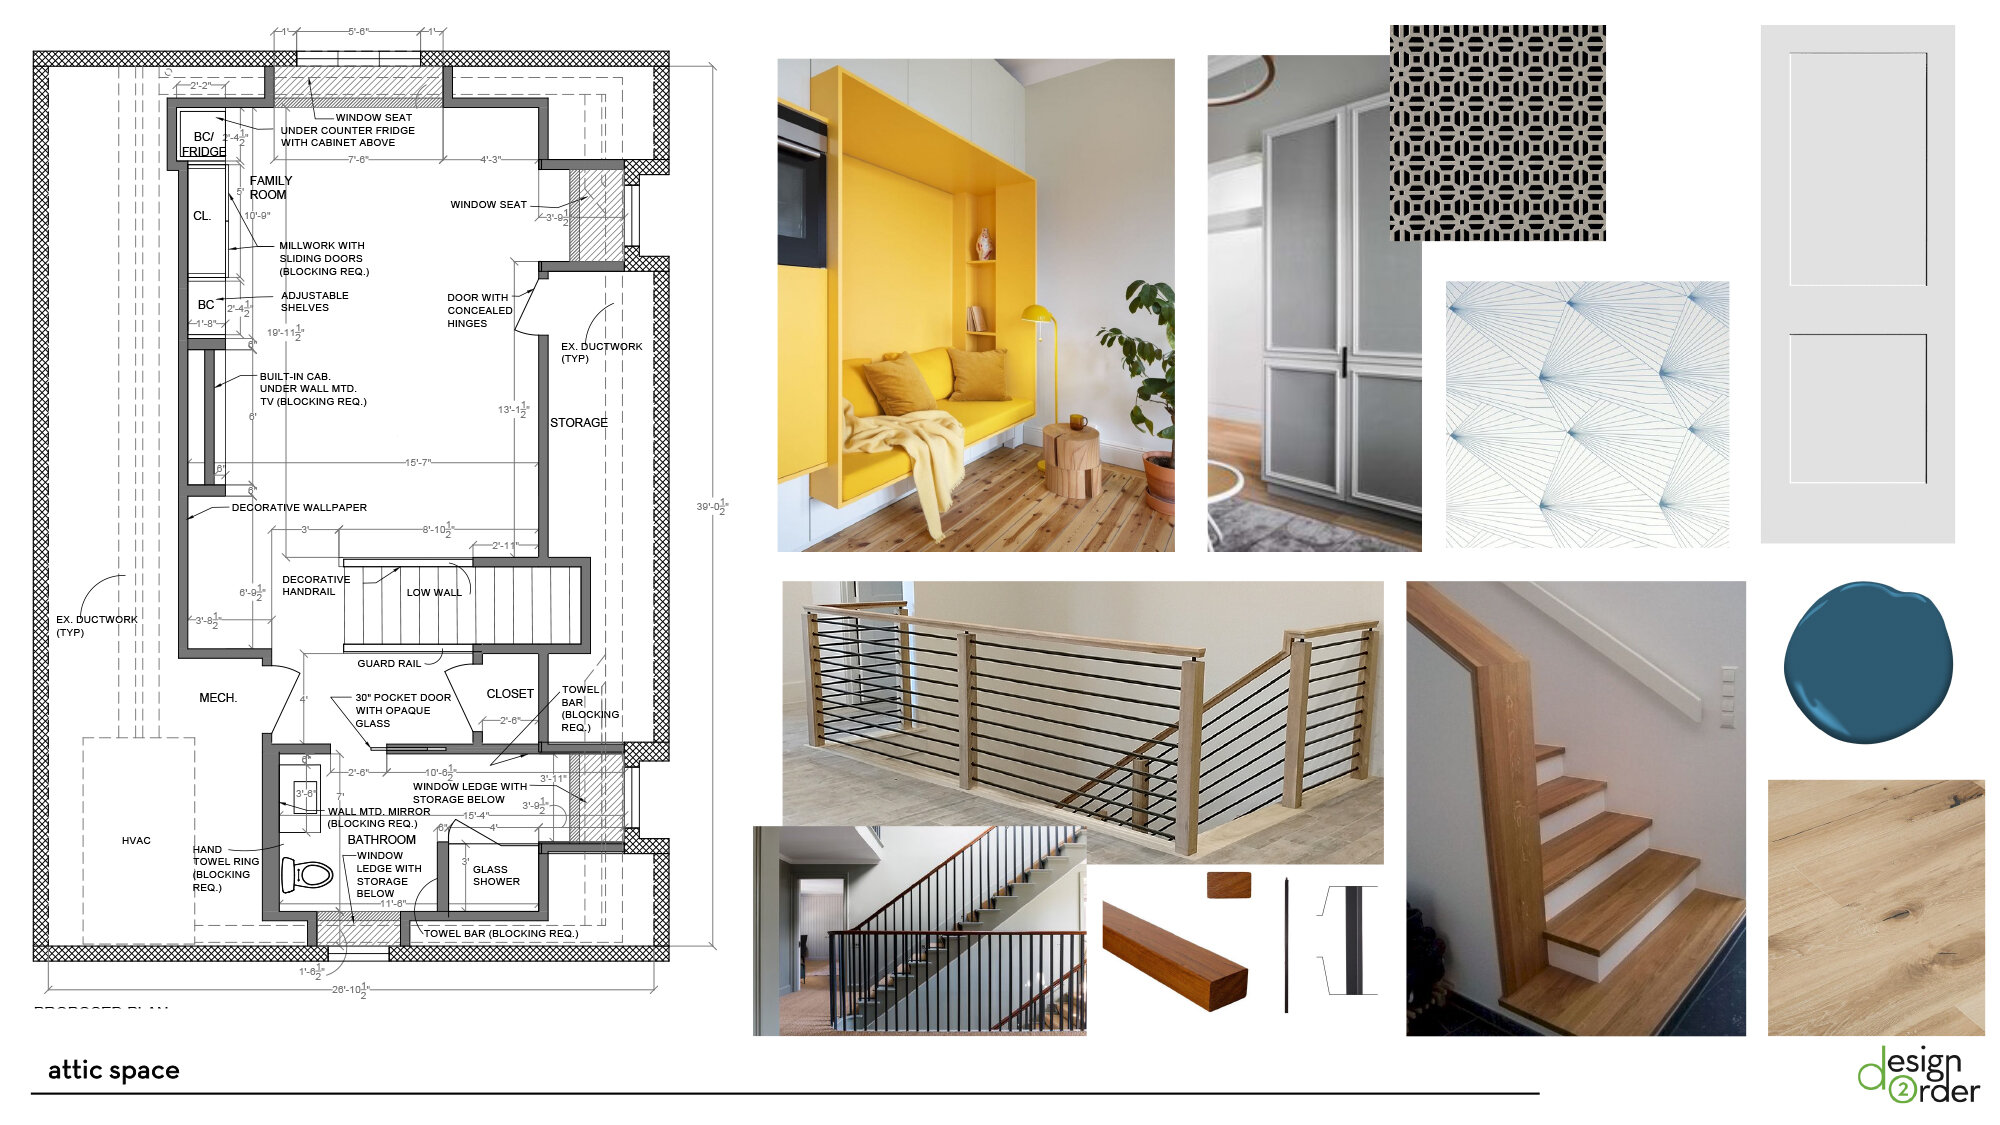 design 2 order julie h sheridan interior design family retreat concept1.jpg